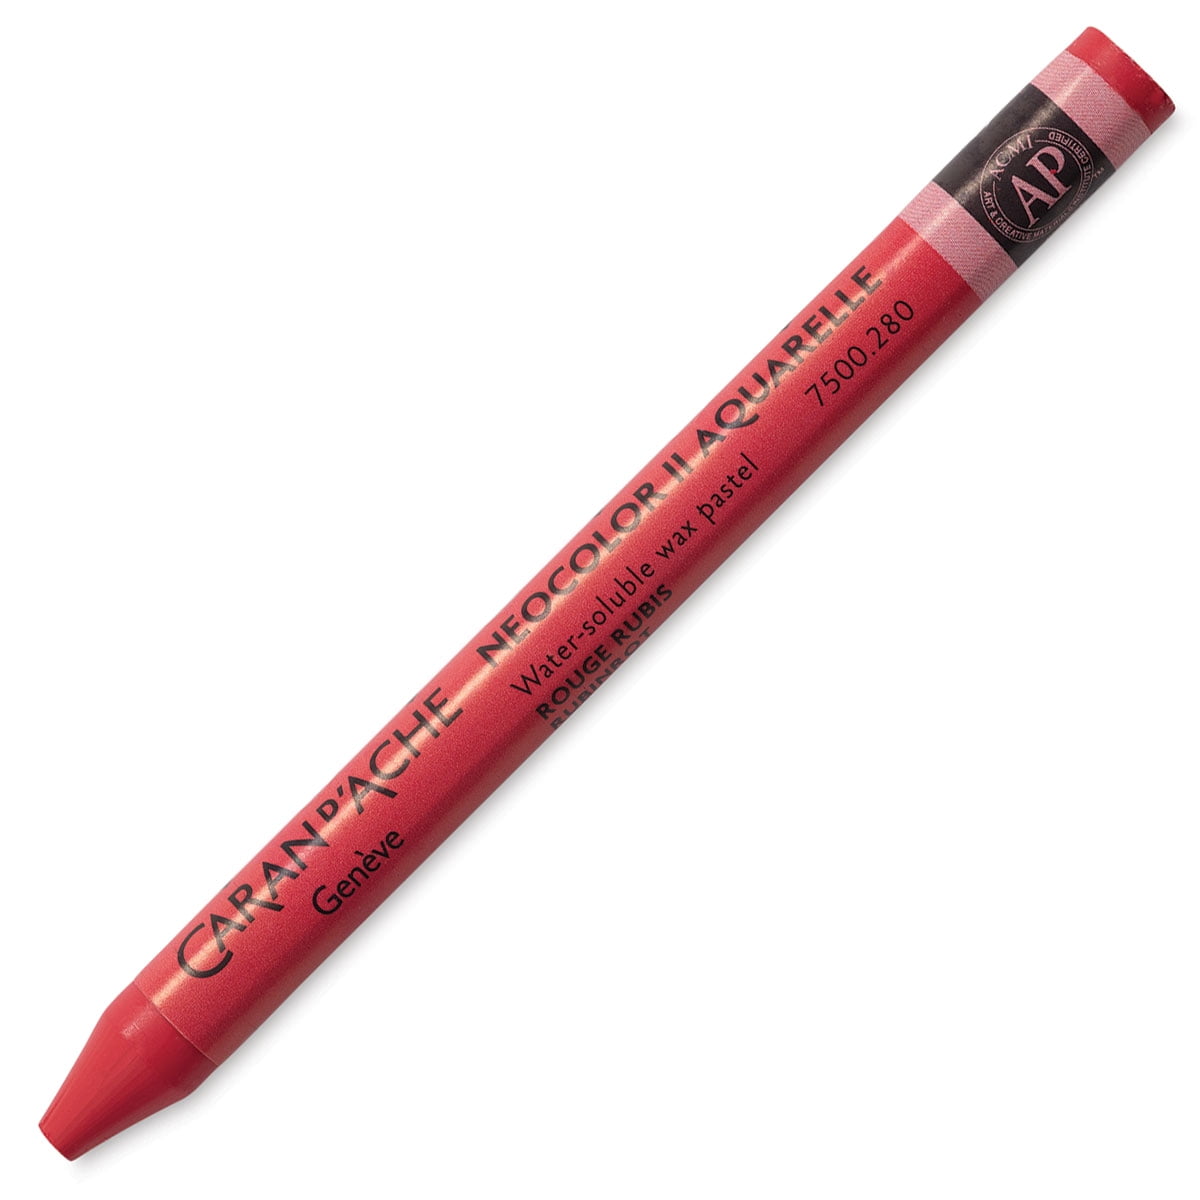 Caran D'ache Neocolor II Crayon - Ruby Red (7500.28)